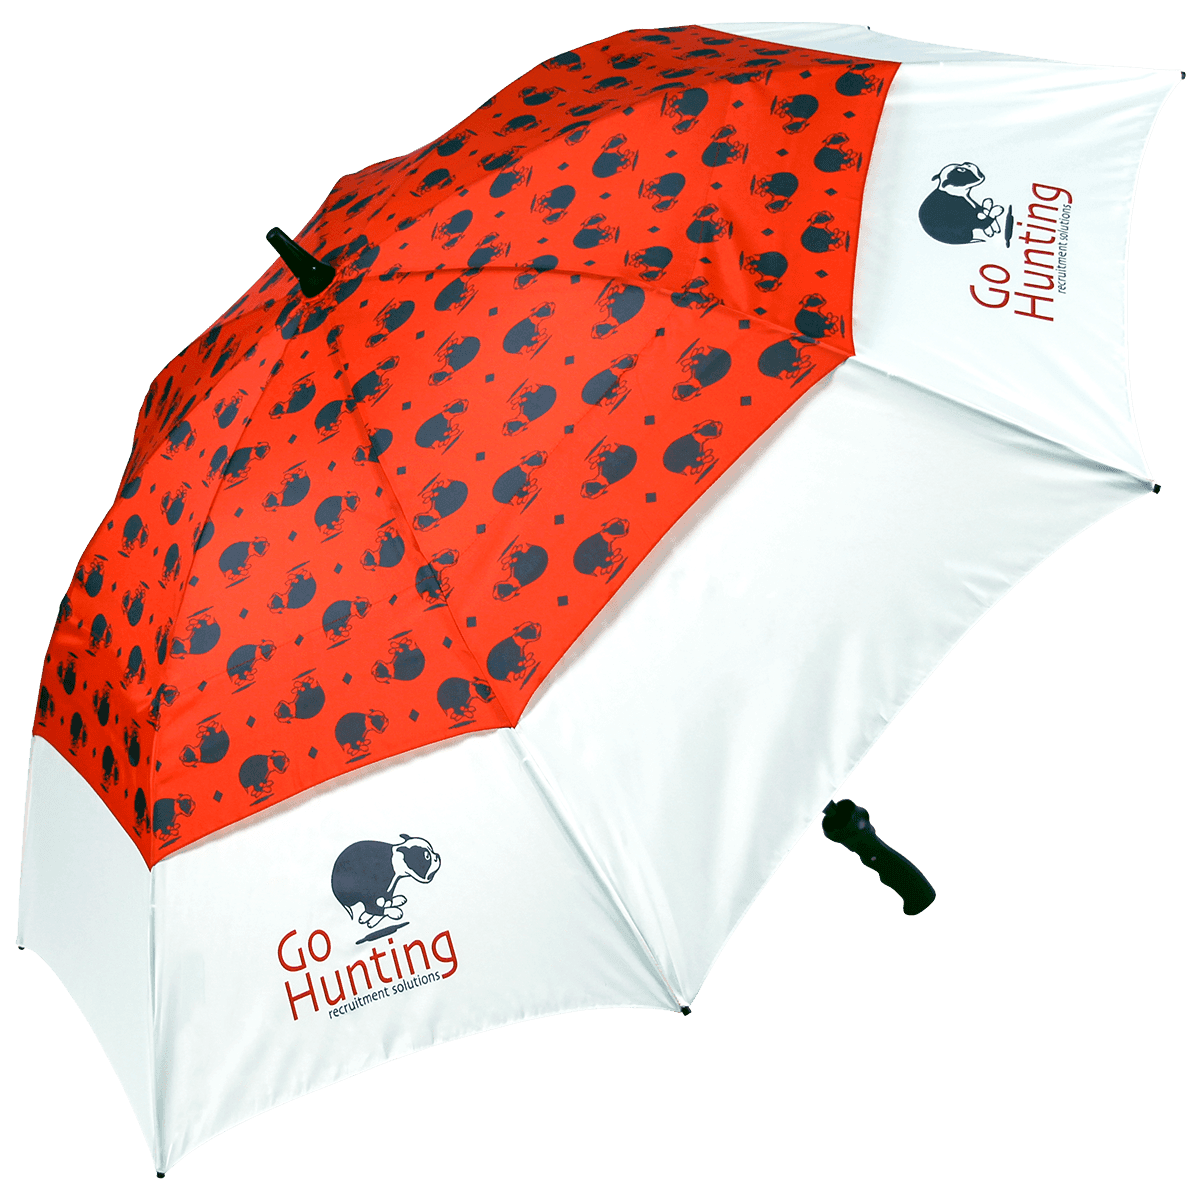 ProBrella Fiberglass Vented Soft Feel Umbrella - Promotions Only Group Limited